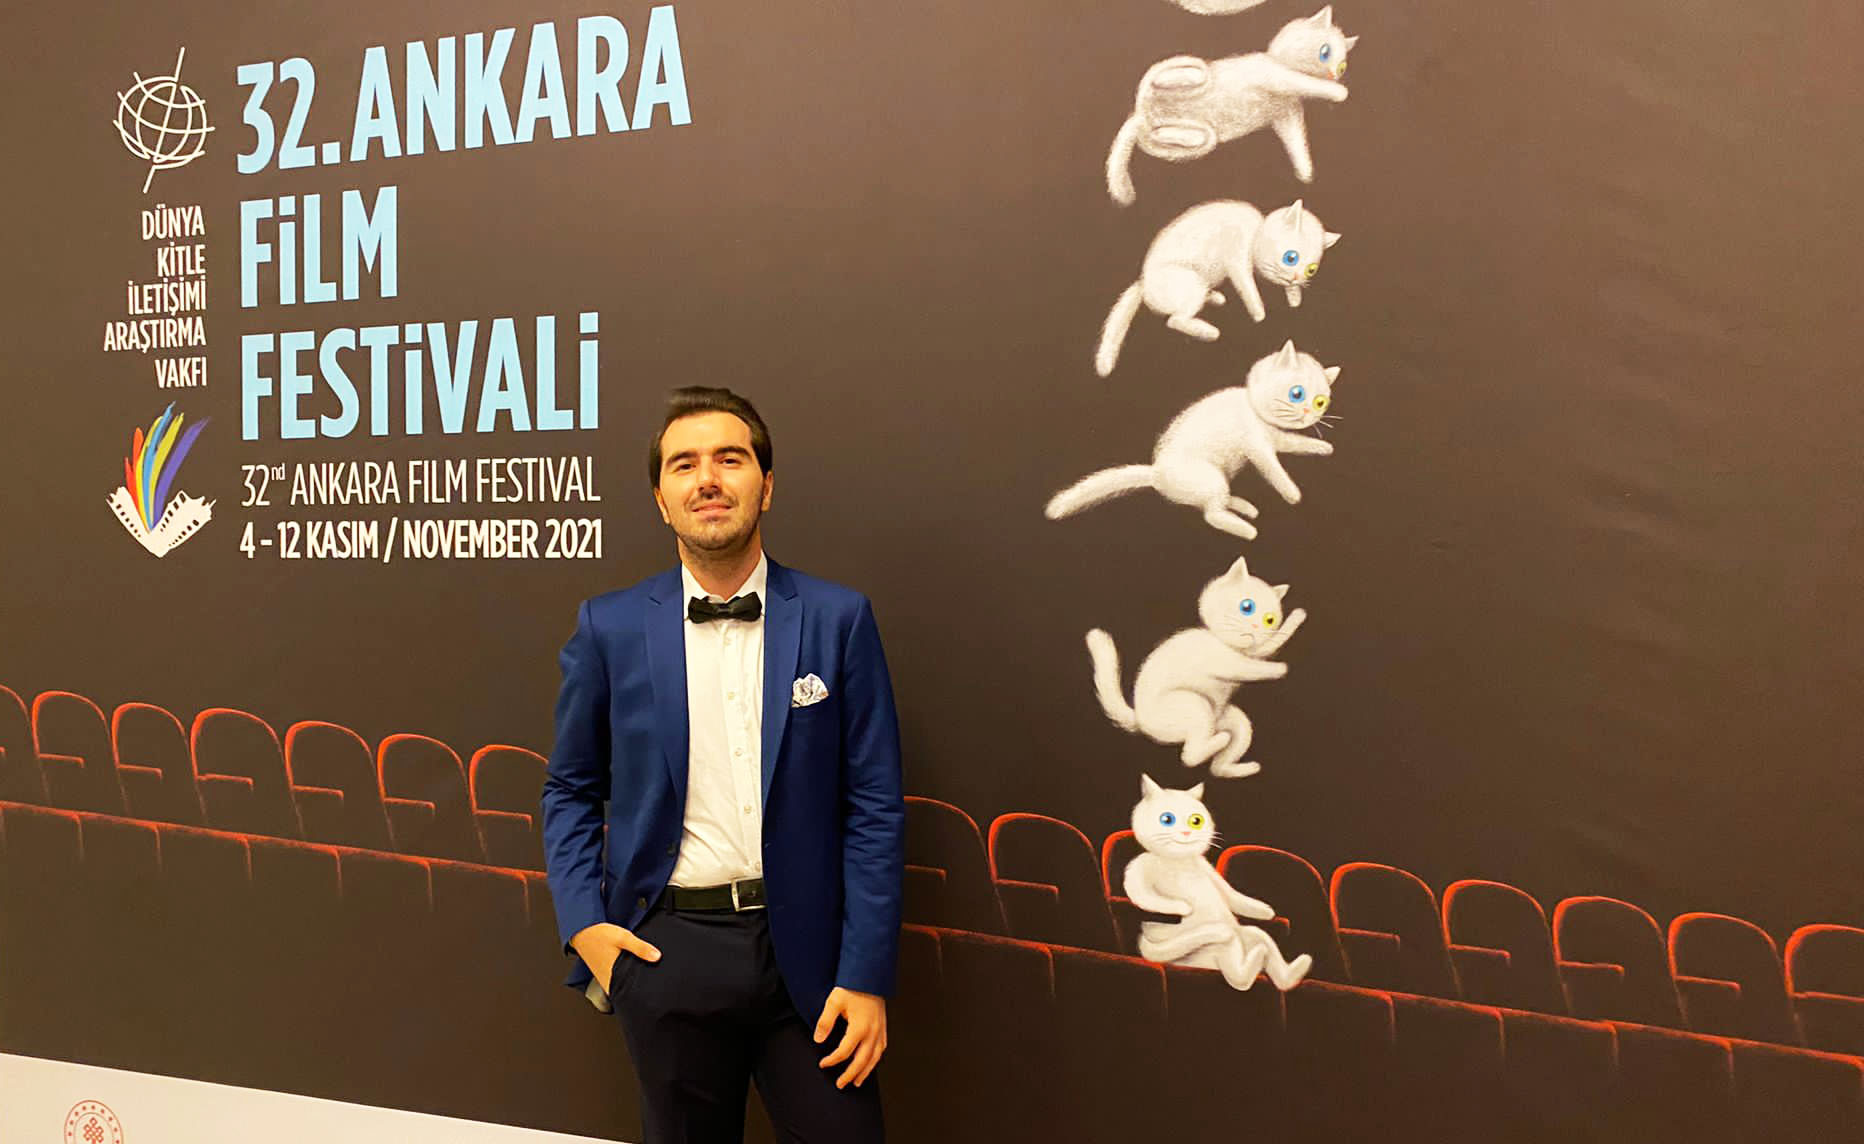 Ankara Film Festivali’nde 32. kez sinema ve festival coşkusu!